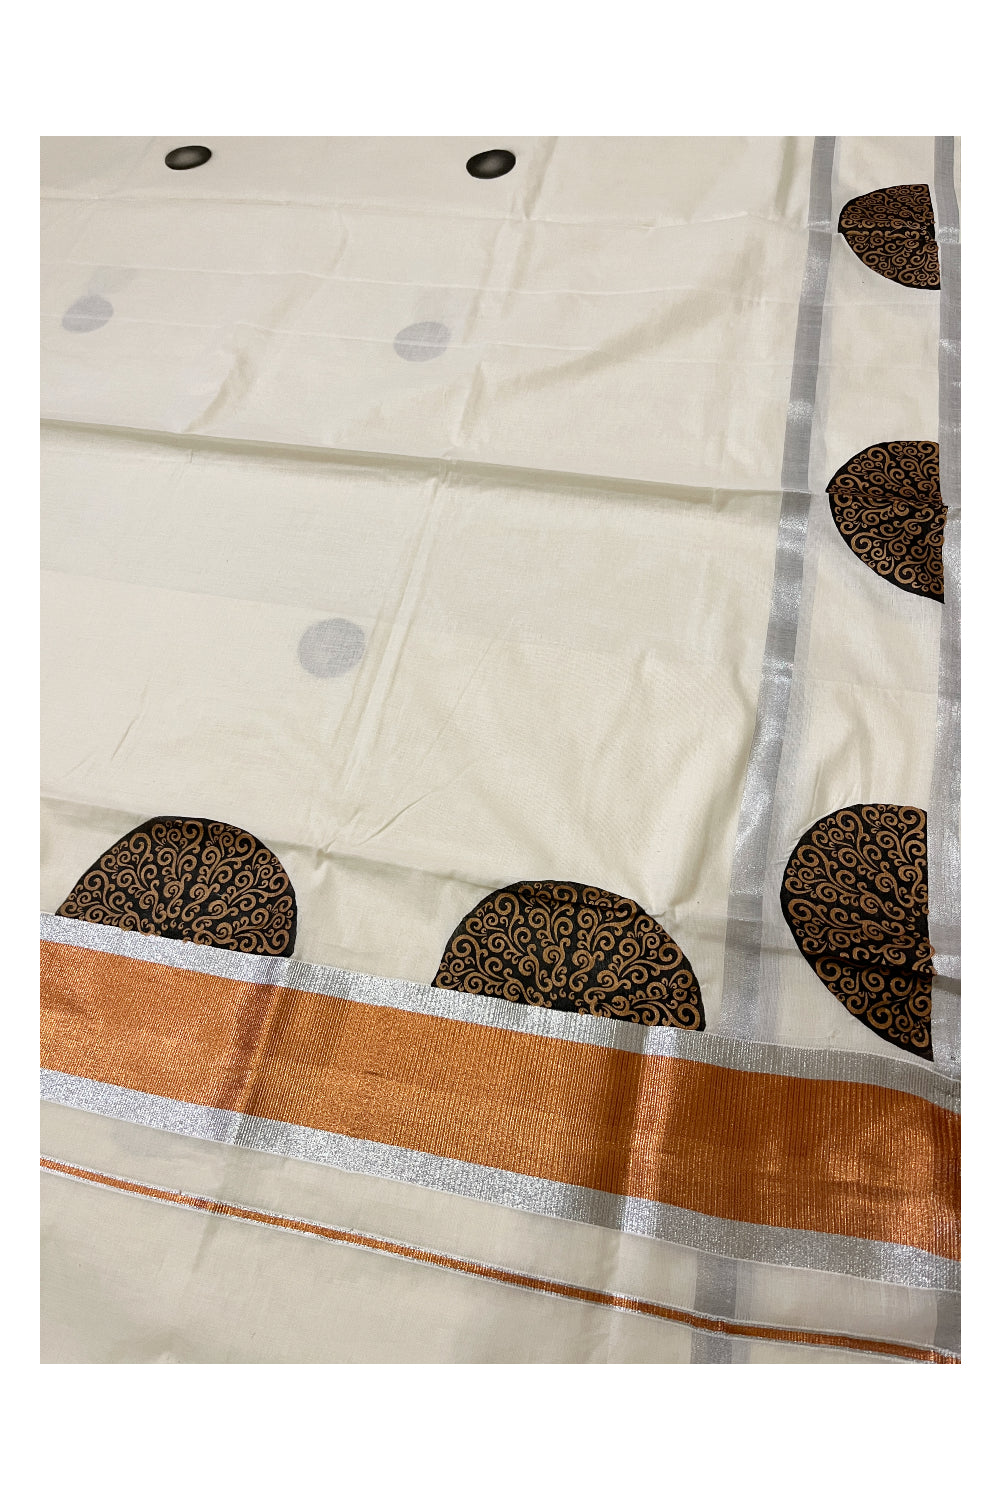 Kerala Cotton Silver and Copper Kasavu Border Saree with Block Printed Design